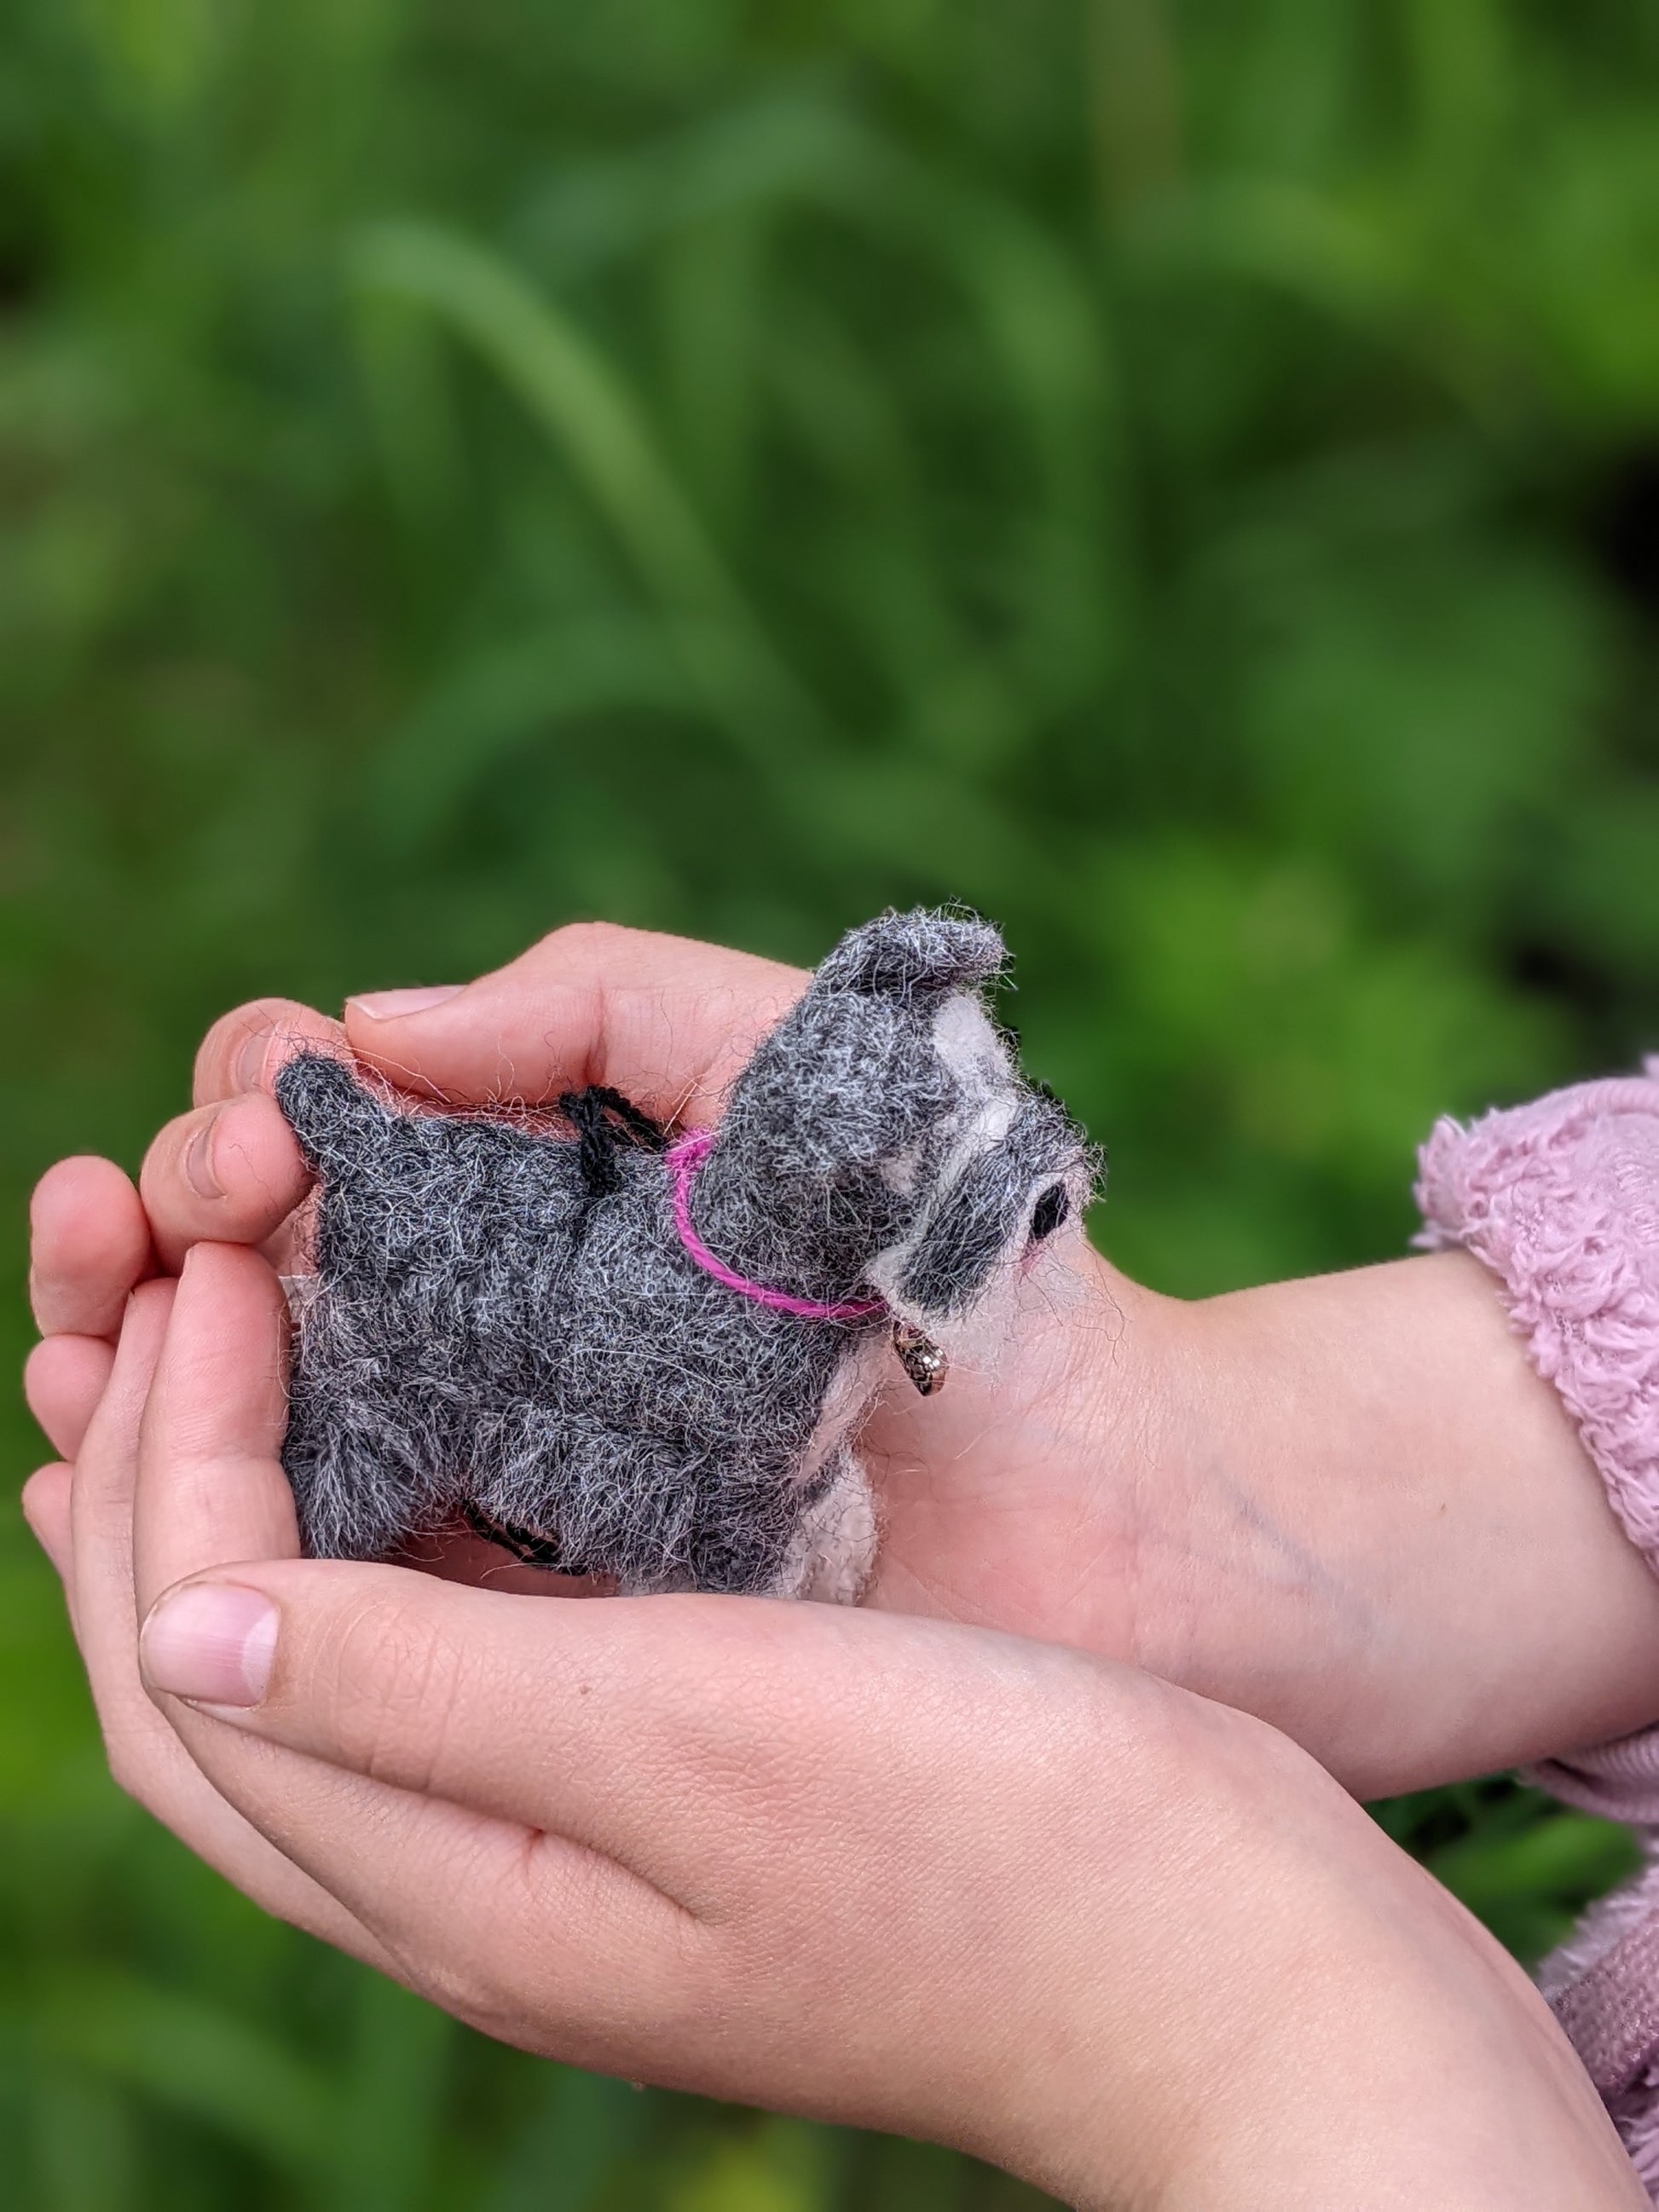 little gray schnauzer needle felted from alpaca wool held in child's hands